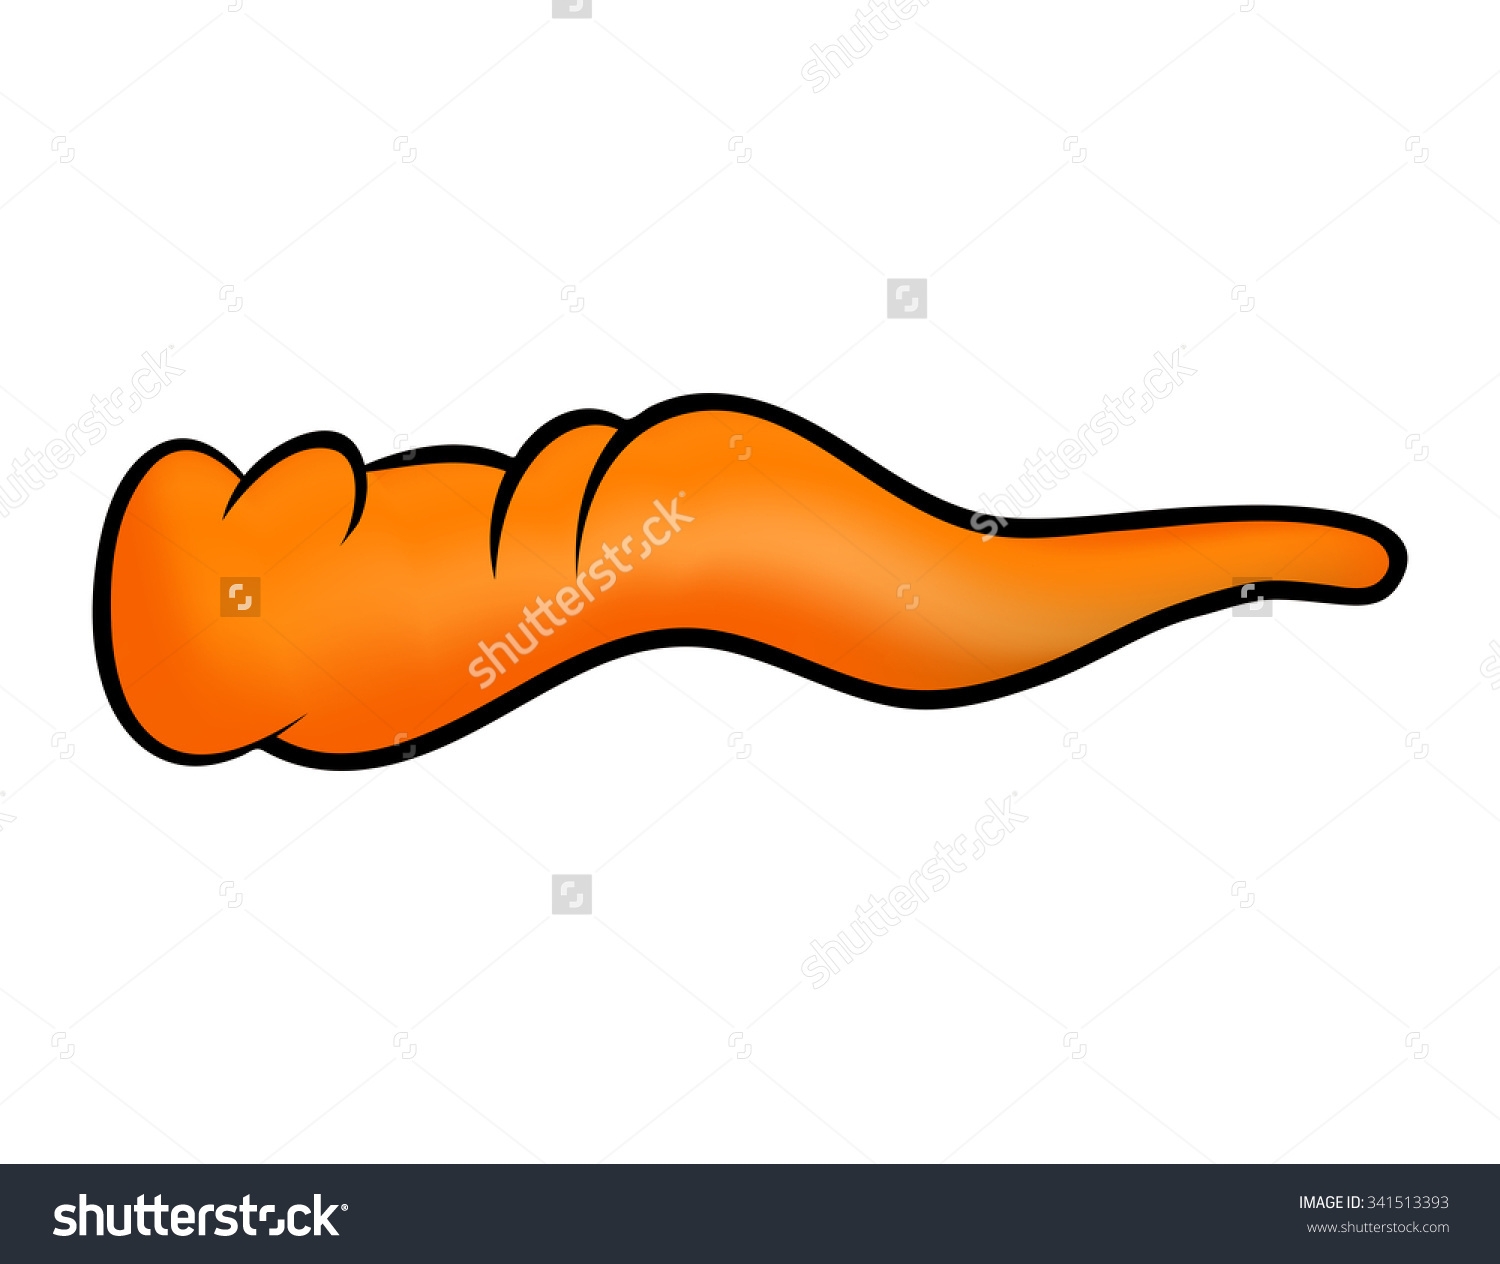 carrot clipart carret